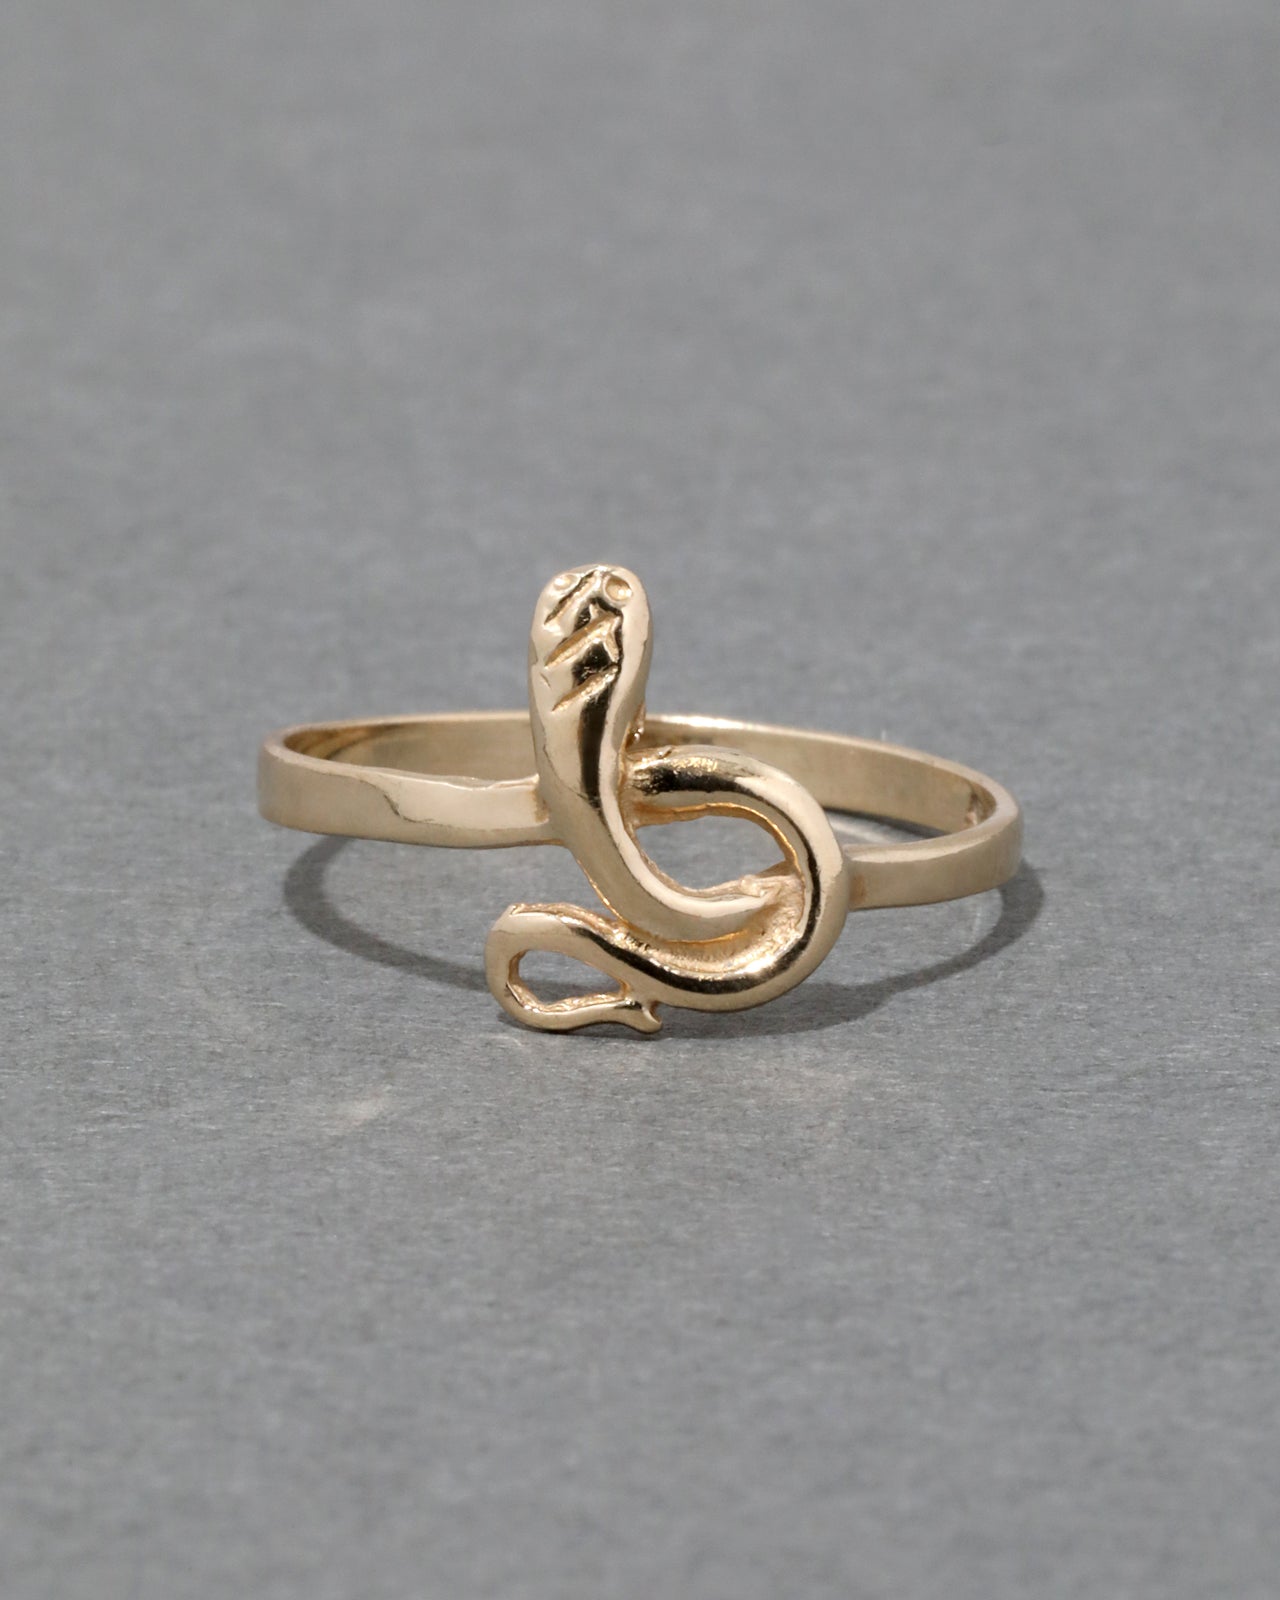 Vintage 1970s 10k Gold Snake Ring - Photo 2